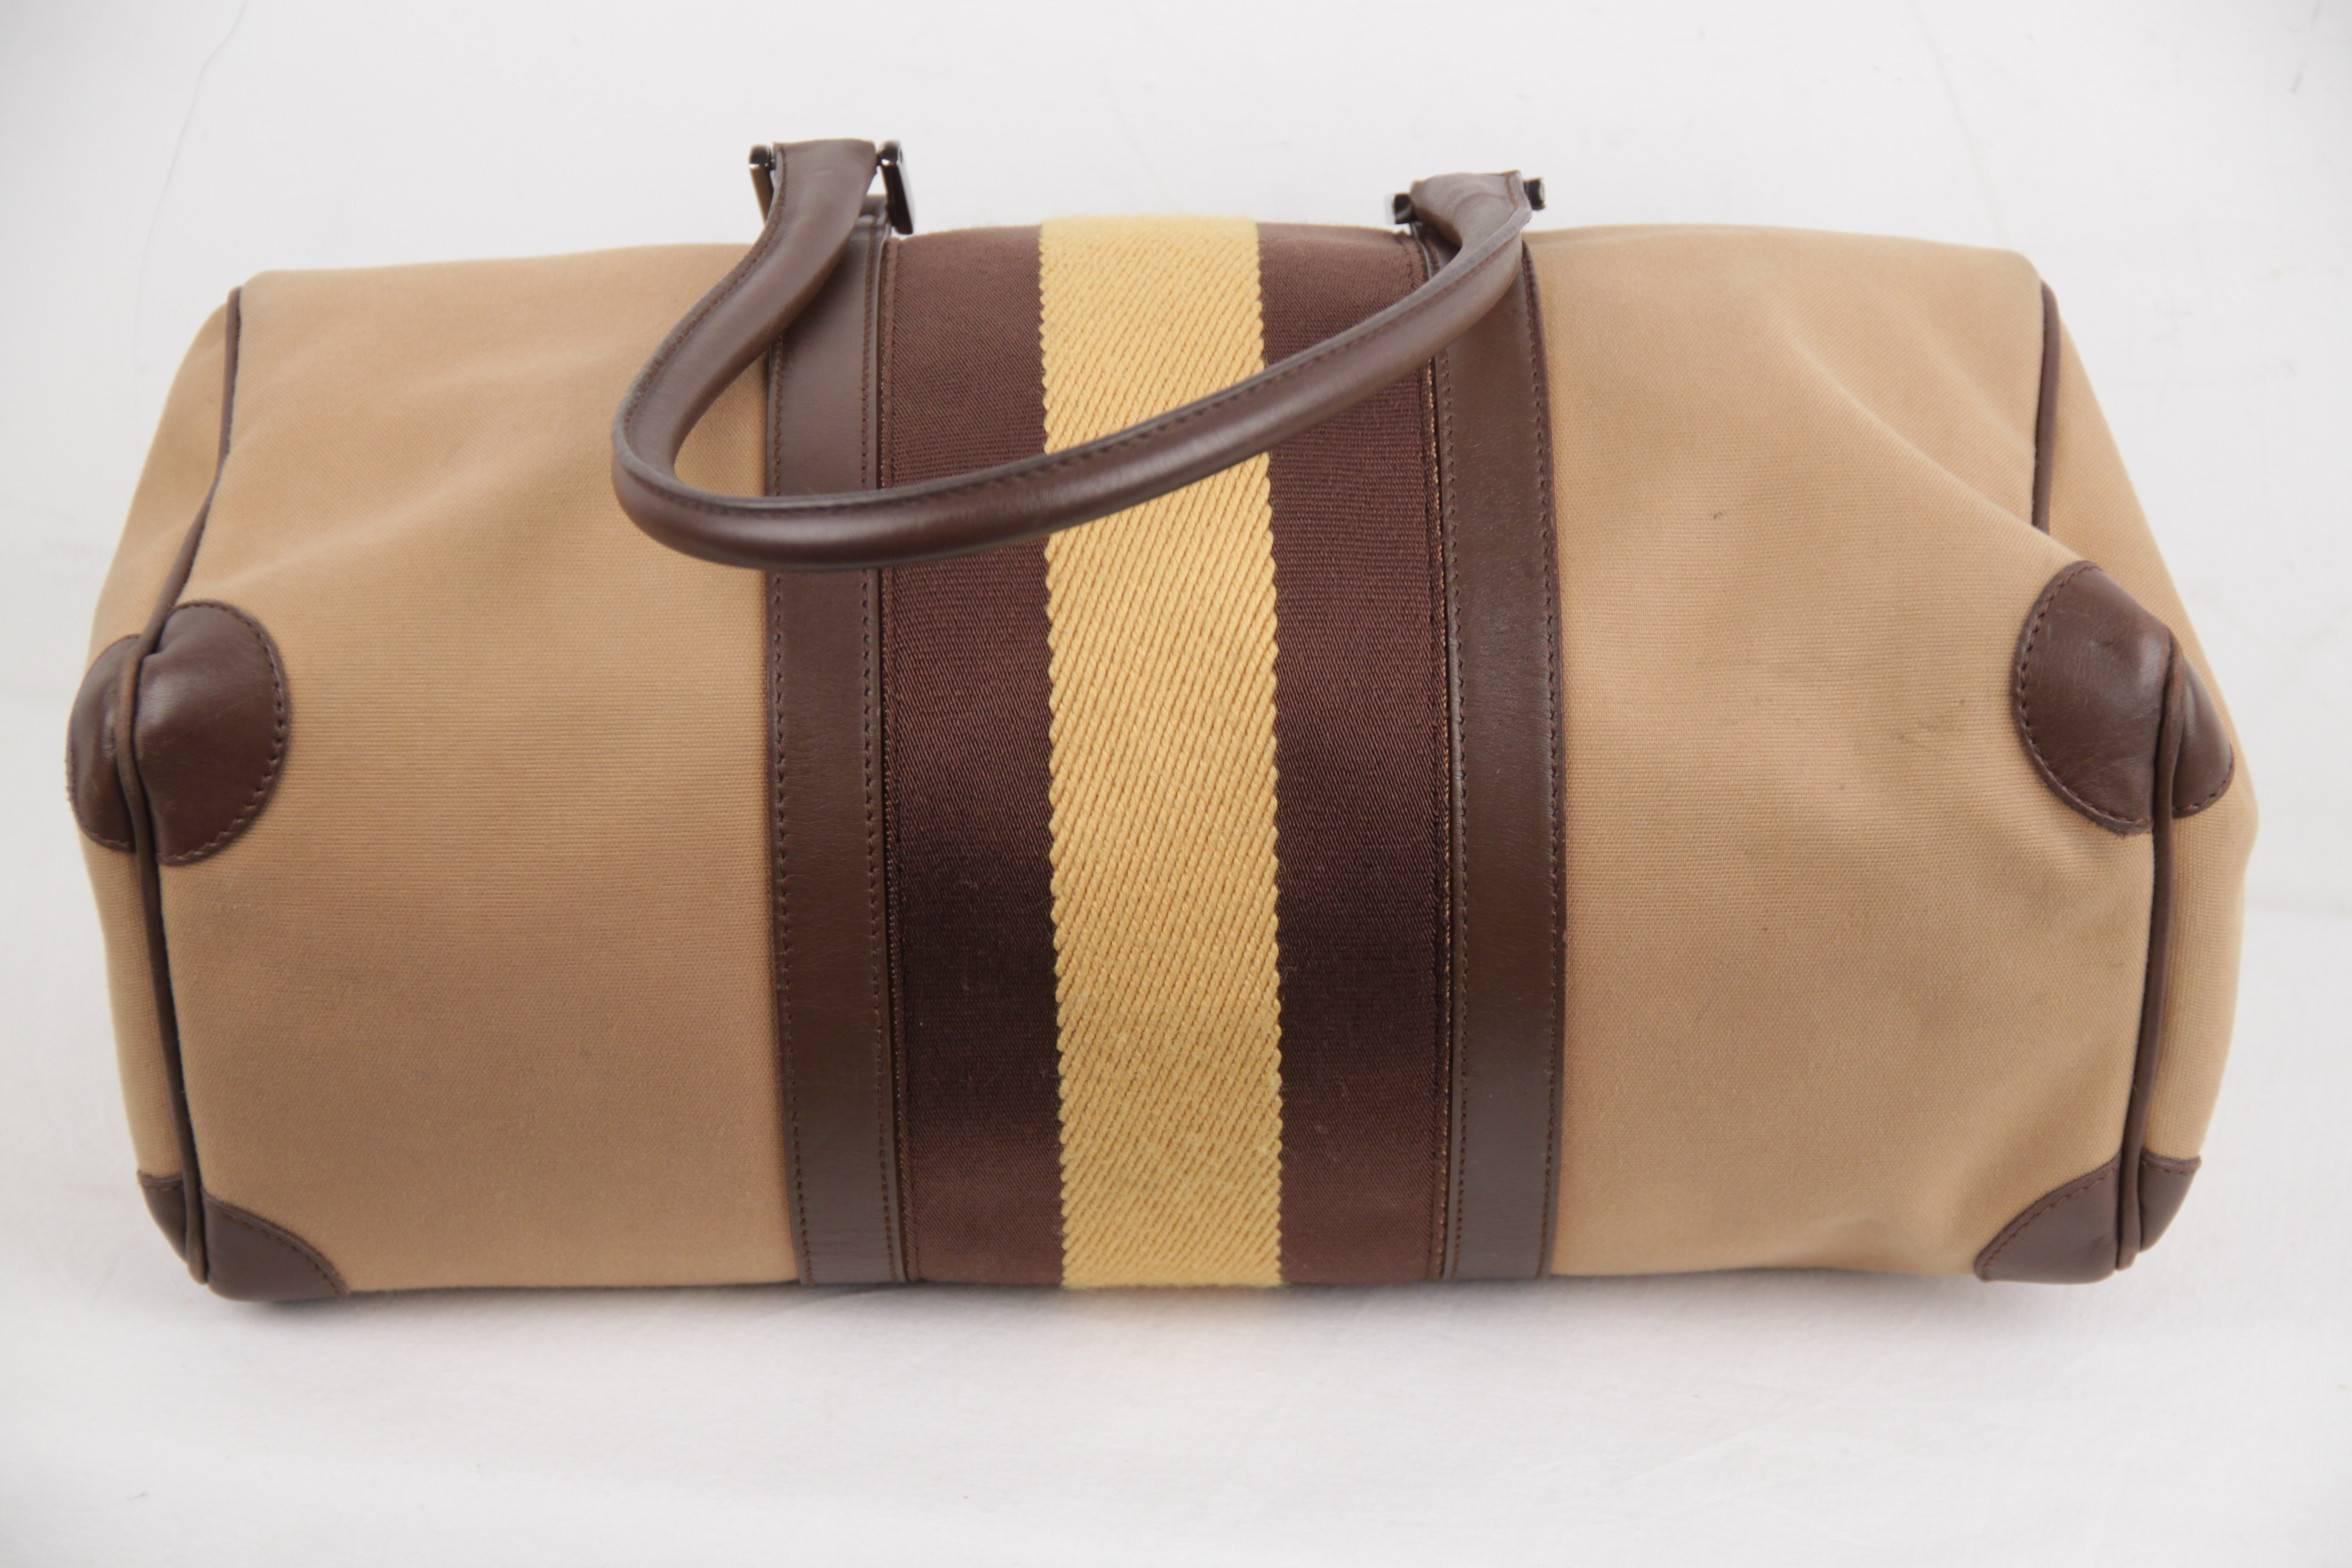 Gucci Italian Tan Canvas Boston Bag Handbag Tote with Brown and Yellow Stripes 2